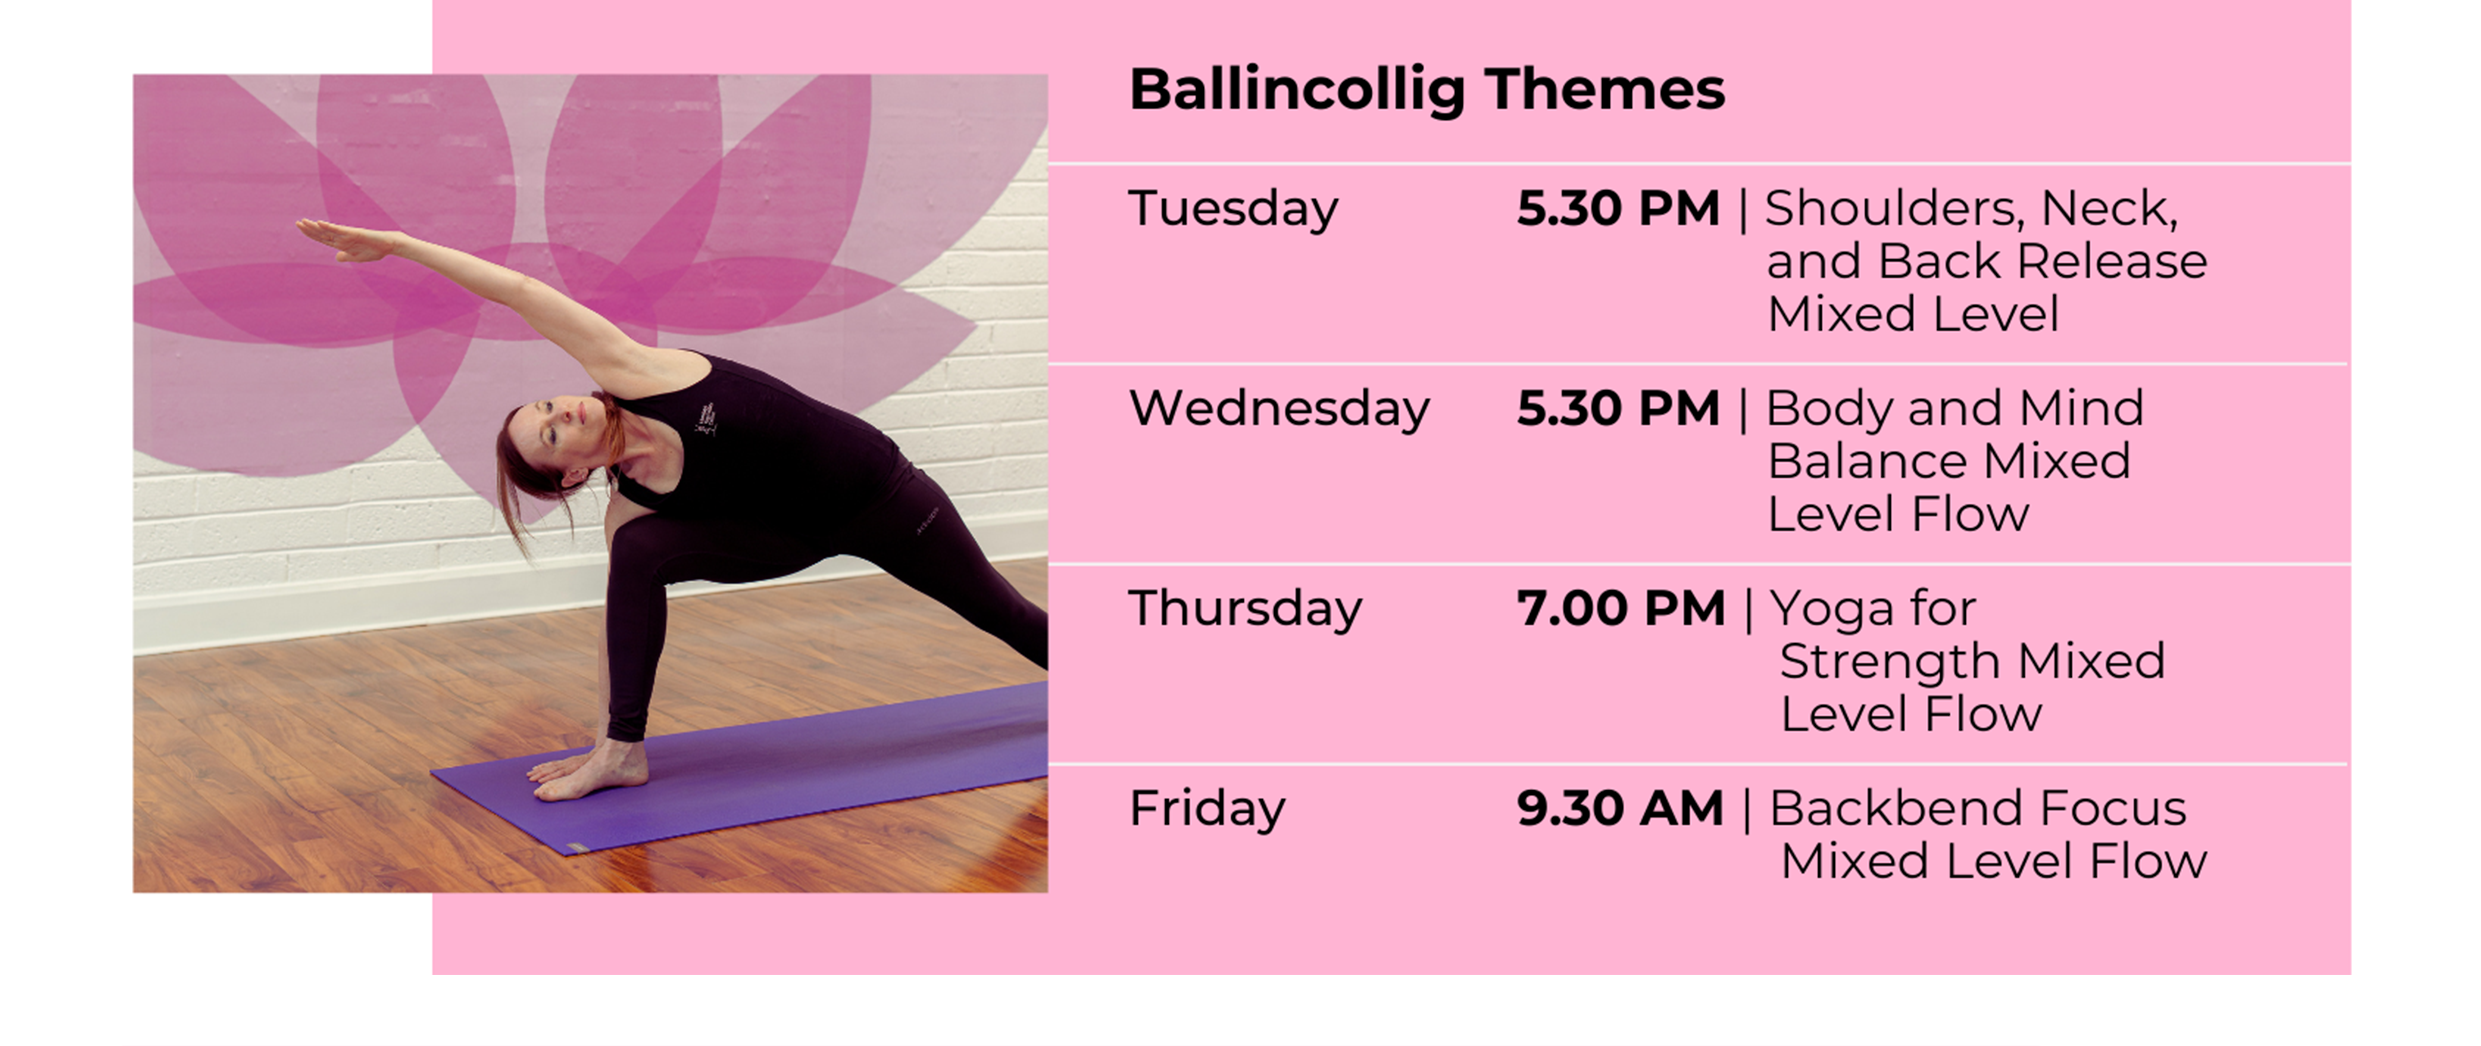 Yoga Themed Class at Ballincollig Yoga Studio in Cork